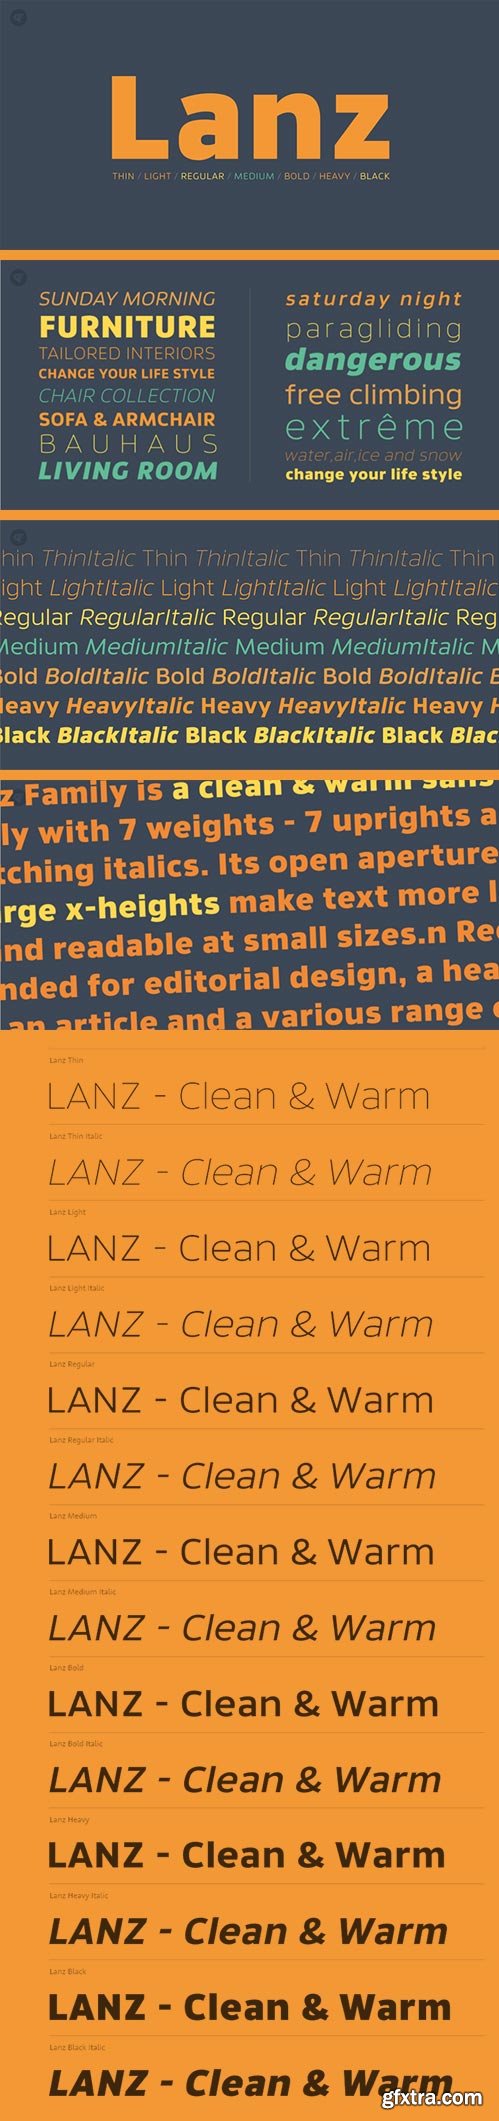 Lanz - Clean & Warm Sans Serif with 7 Weights NEW!